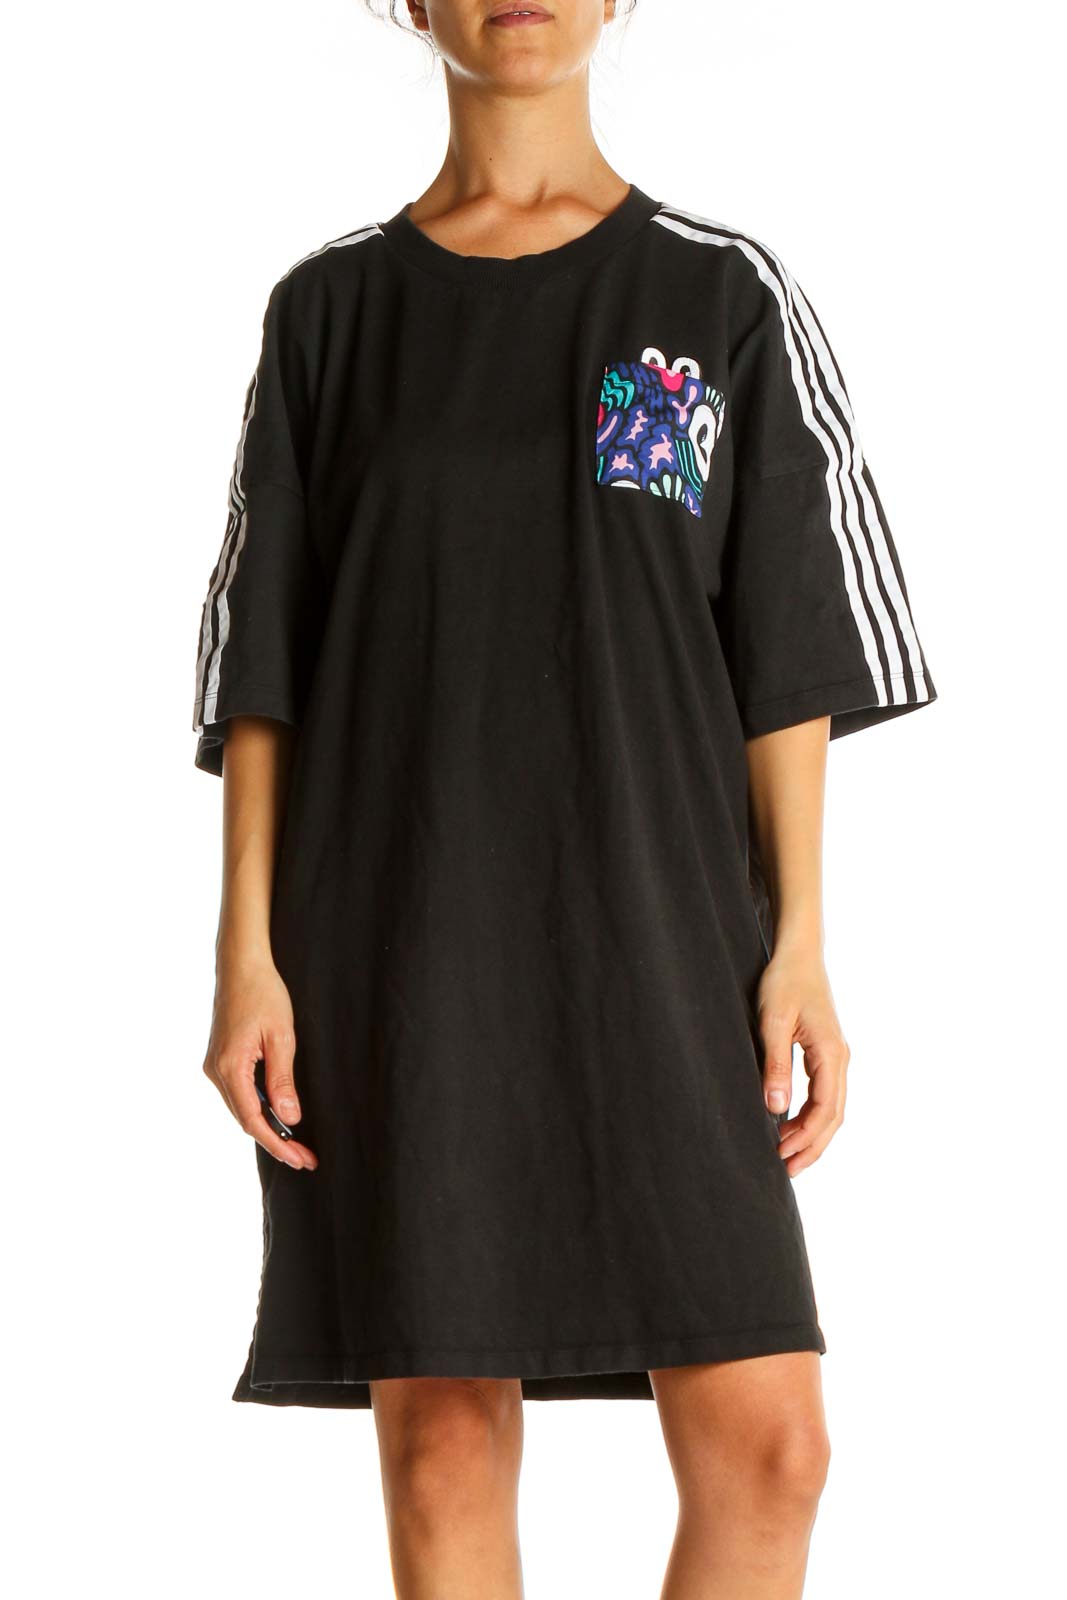 Black Solid Activewear T-Shirt Dress Front